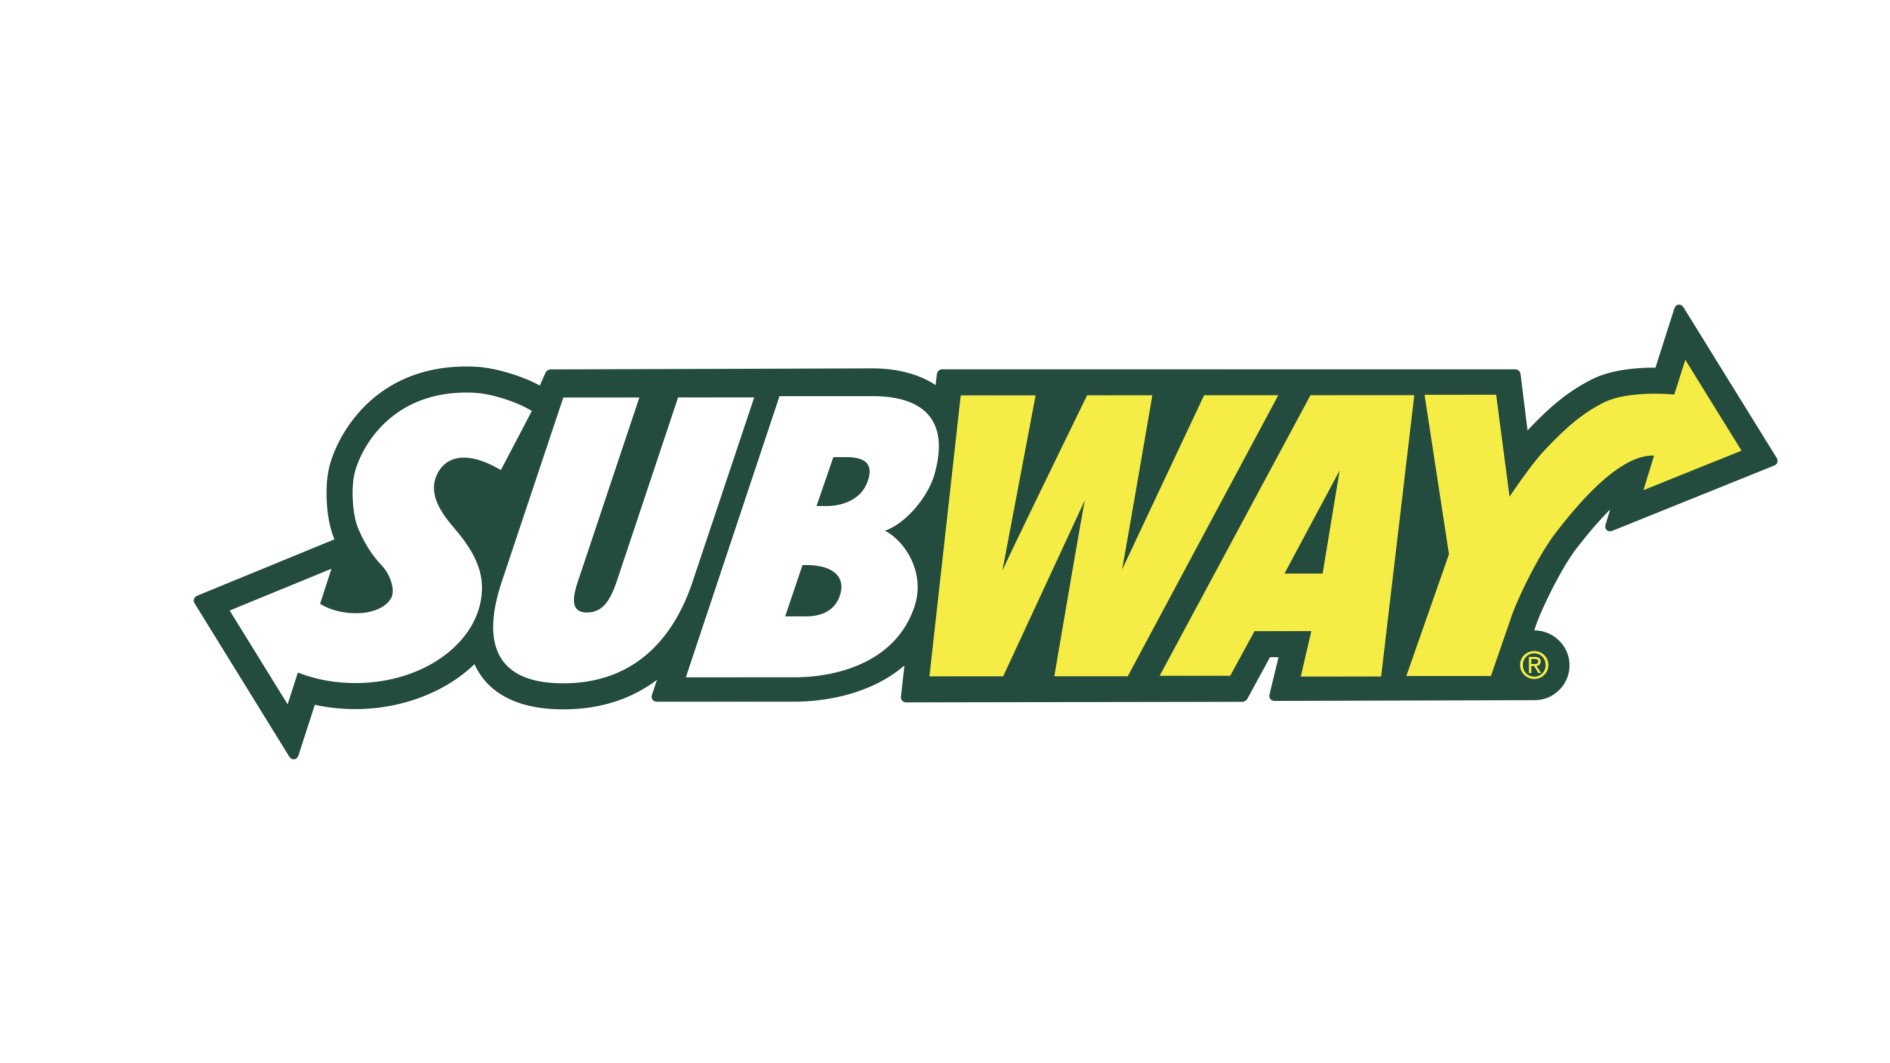 sub way